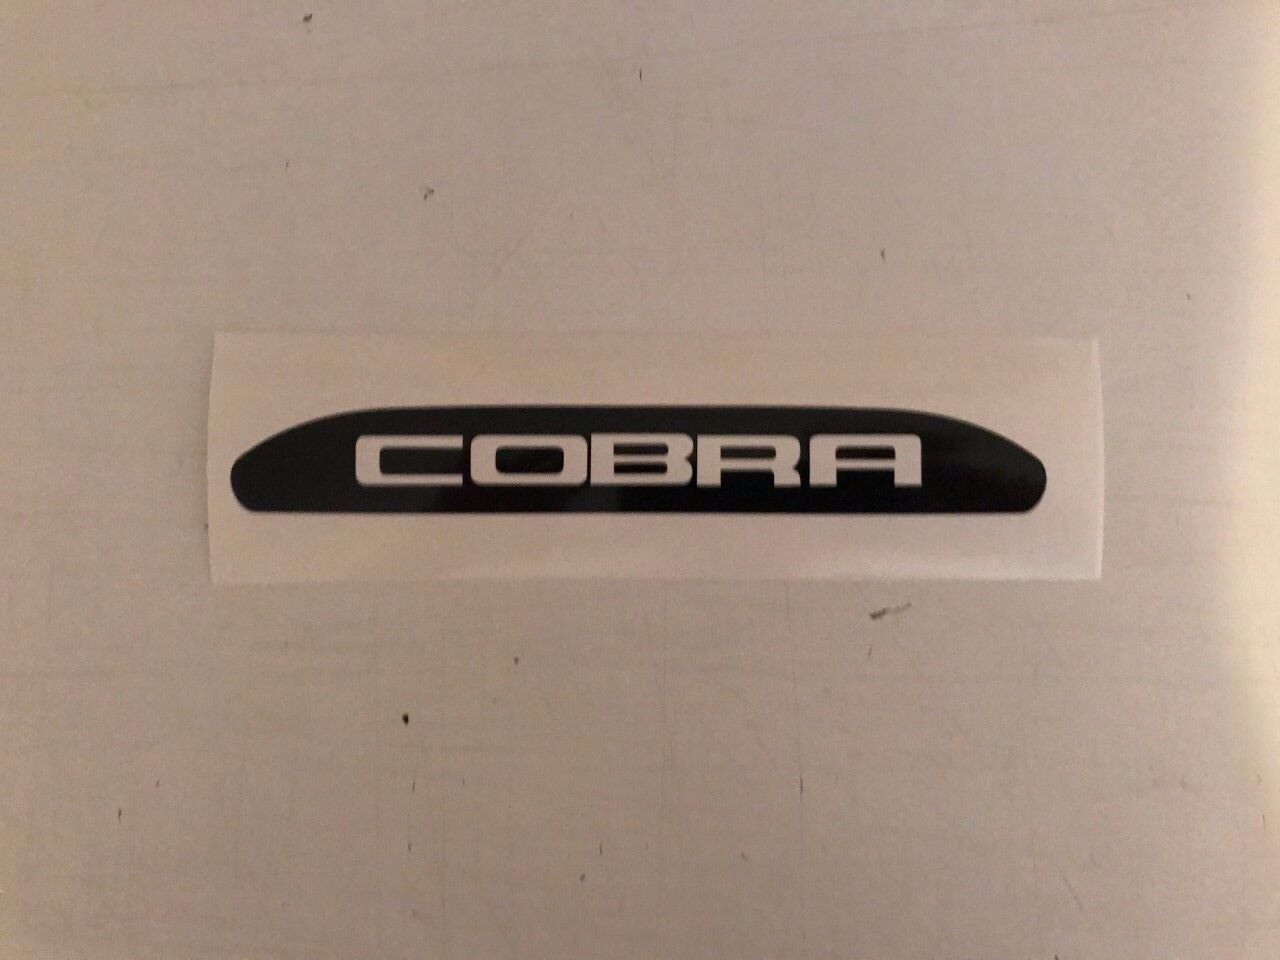 96-98 Mustang Cobra text third brake light cover